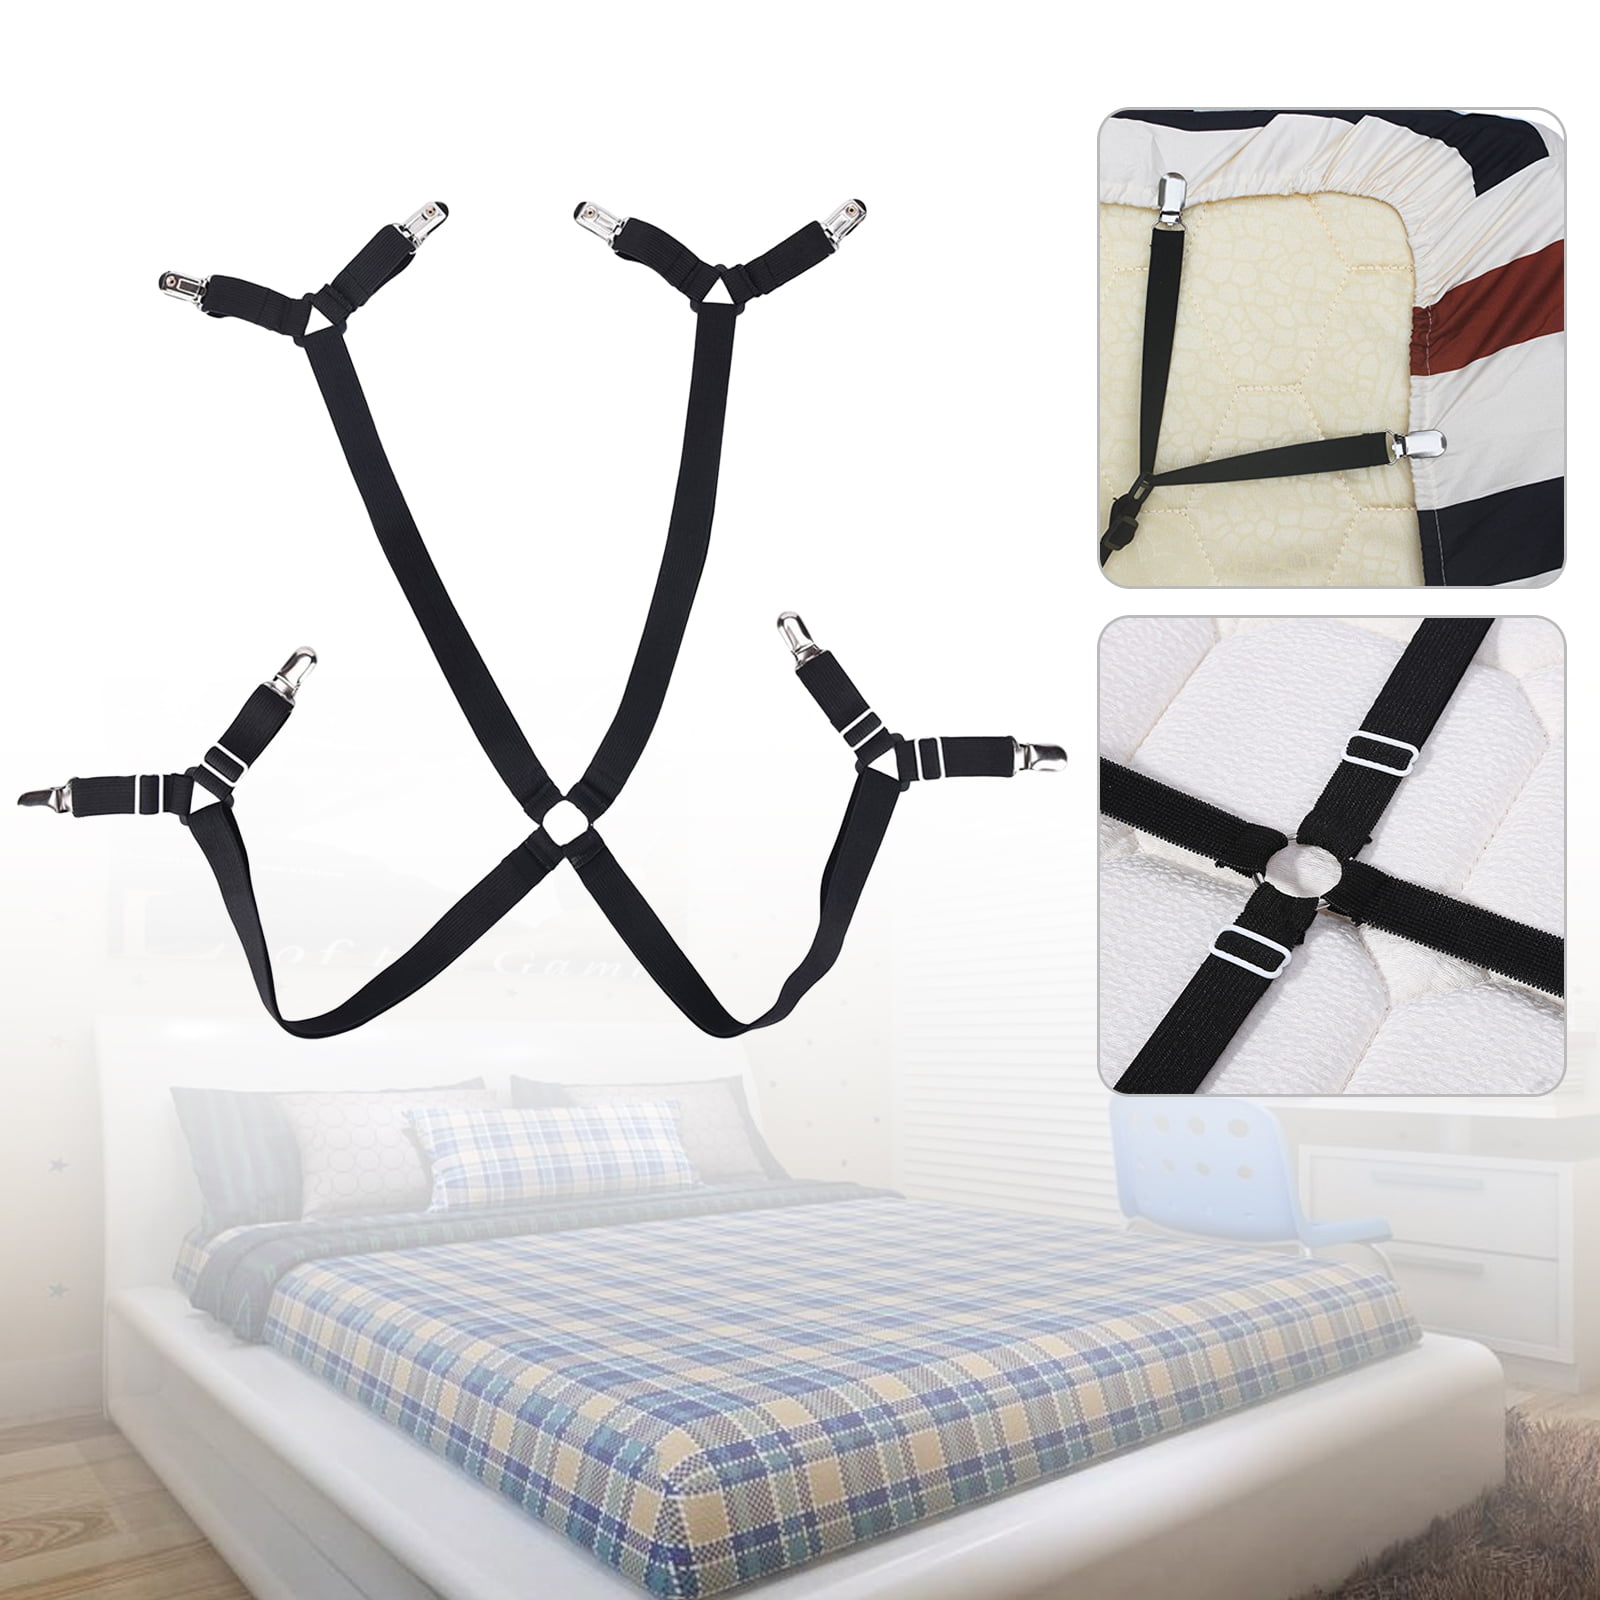 6 Sides 3-Way Bed Fitted Crisscross Sheet Straps Suspender Gripper Fastener Clip 